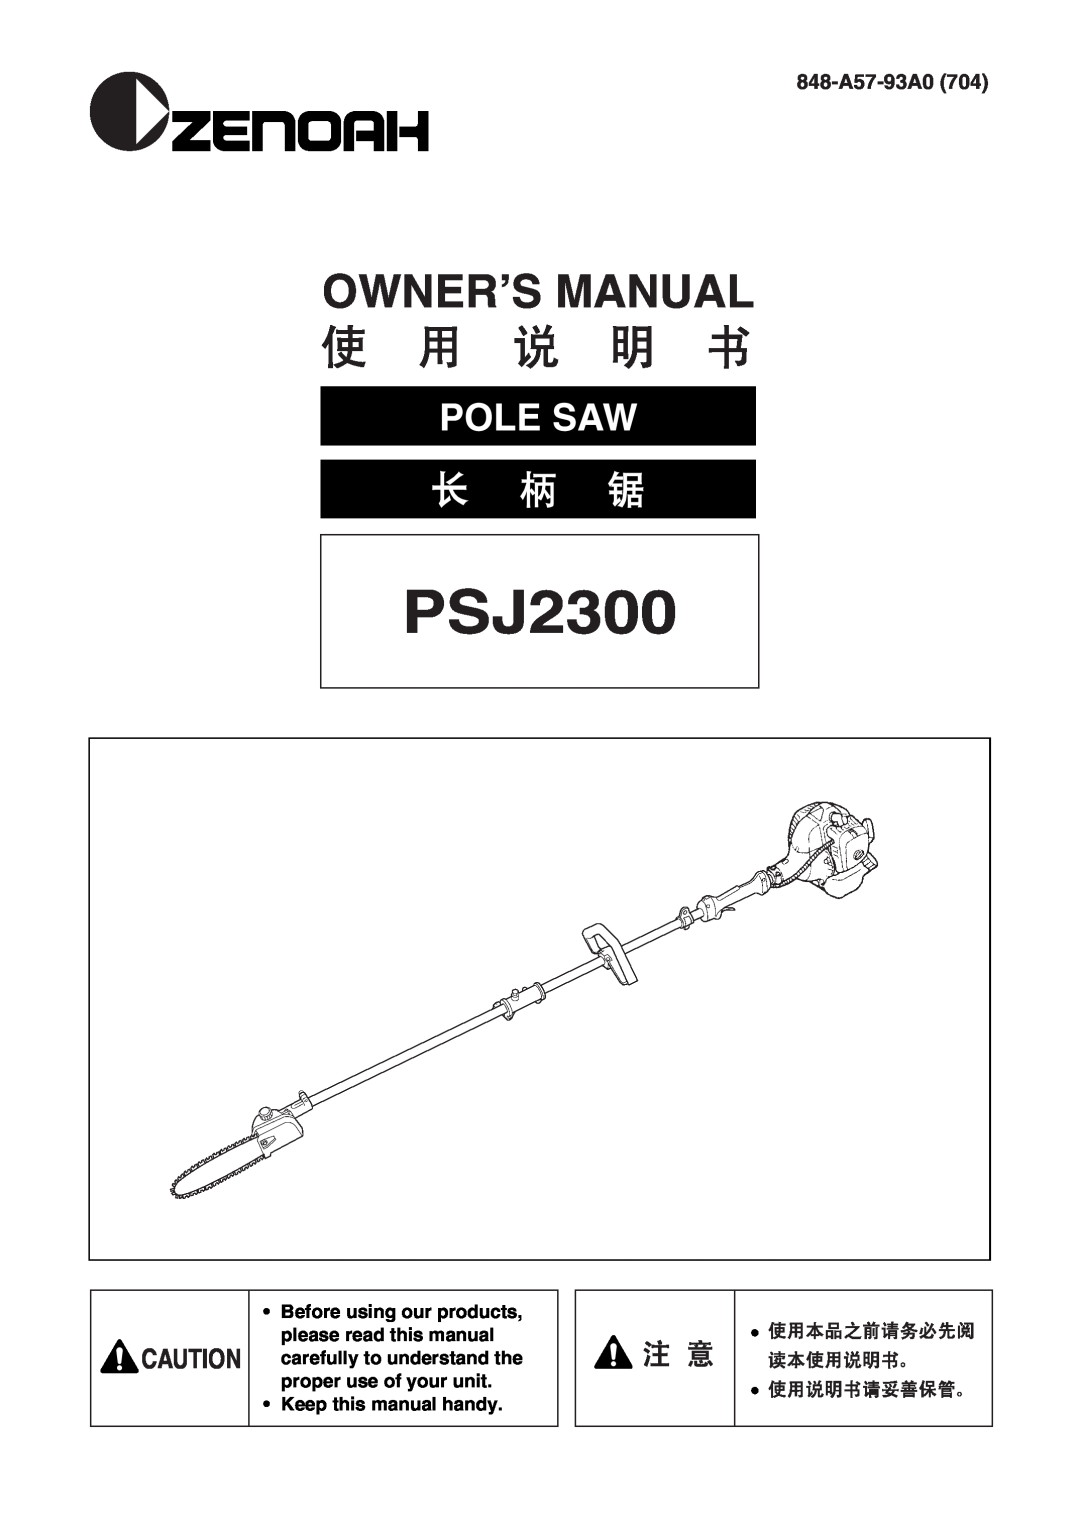 Zenoah PSJ2300 owner manual 848-A57-93A0, Keep this manual handy, Pole Saw, 长 柄 锯 